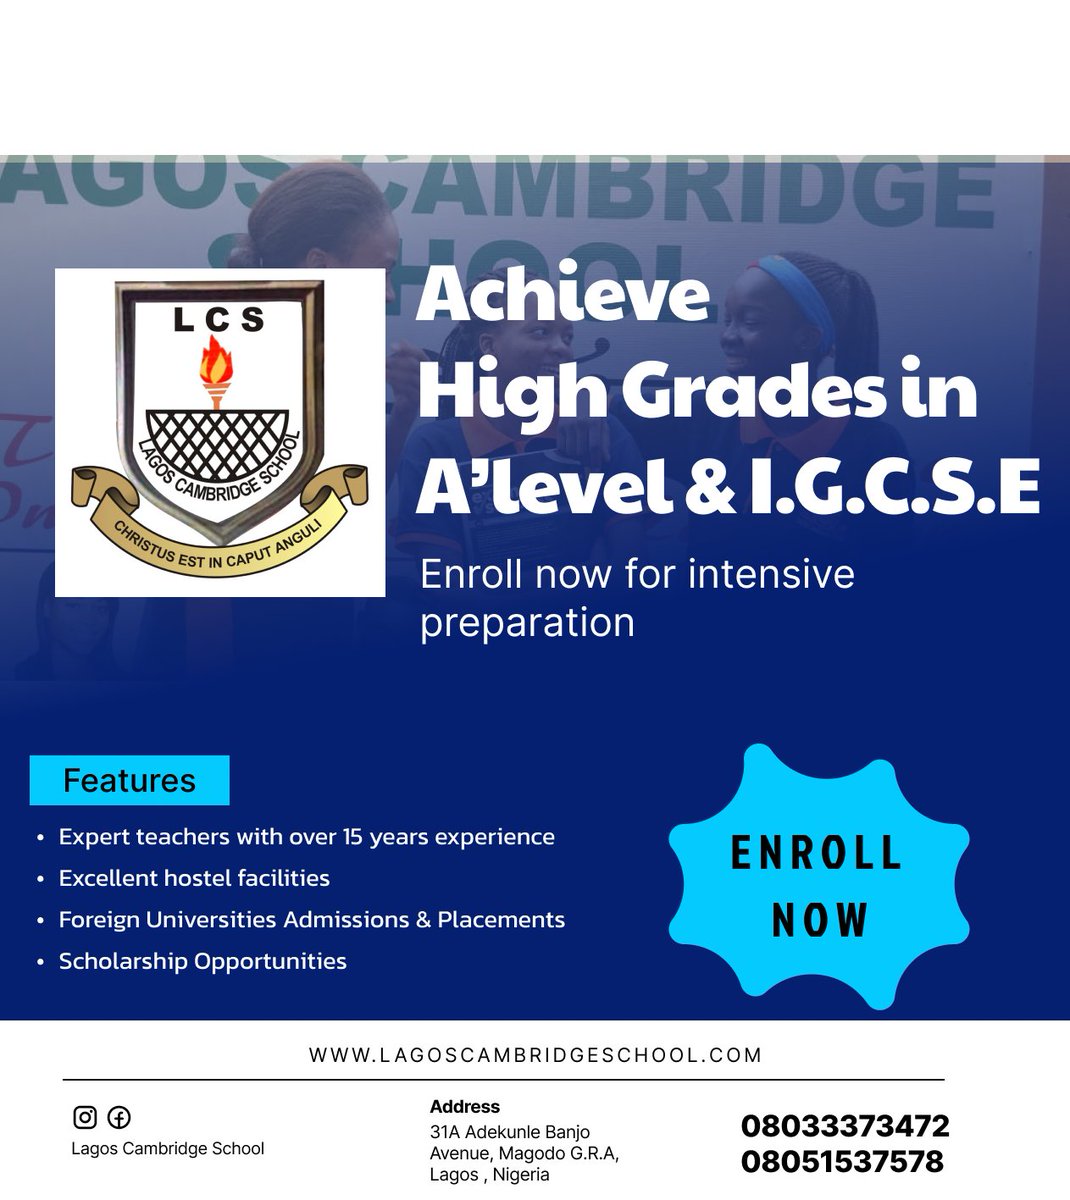 @lagoscambridgeS 
At Lagos Cambridge school, we make scholars achieve high grades in A-level and I.G.C.S.E: lagoscambridgeschool.com

#lagoscambridgeschool
#studyabroad
#ALevel
#ieltspreparation
#scholarshipopportunities